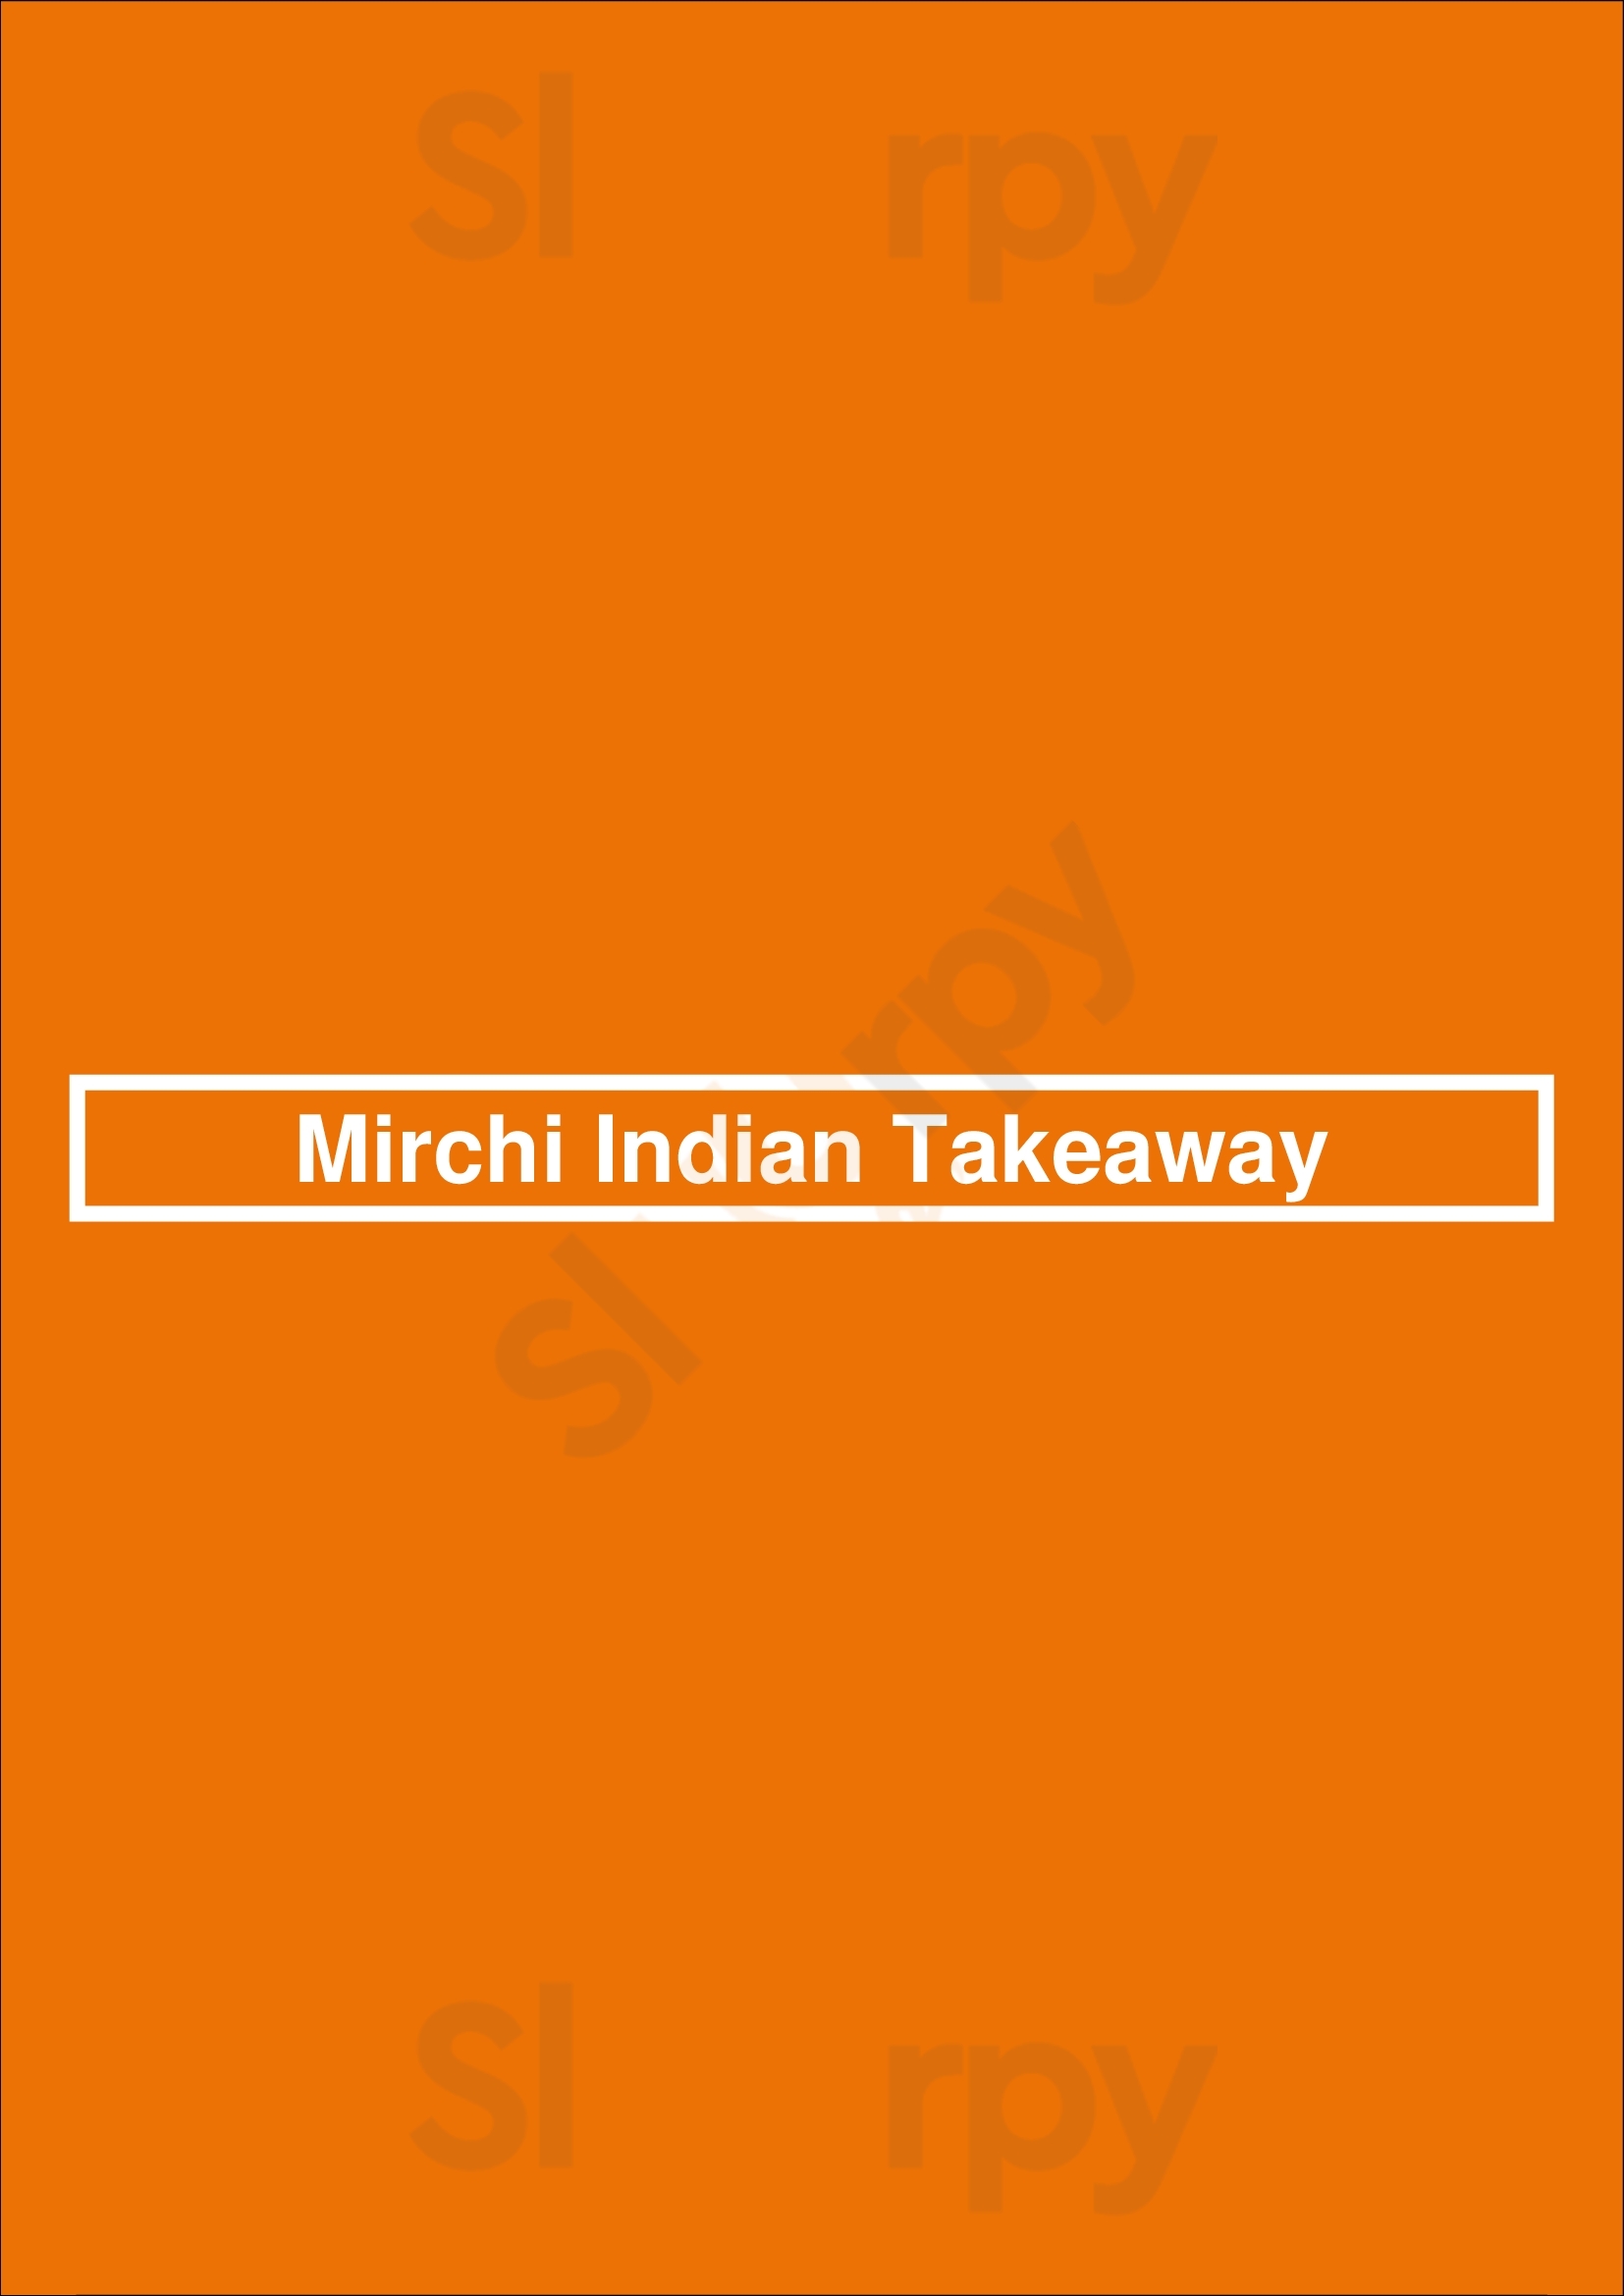 Mirchi Indian Takeaway Newport Menu - 1